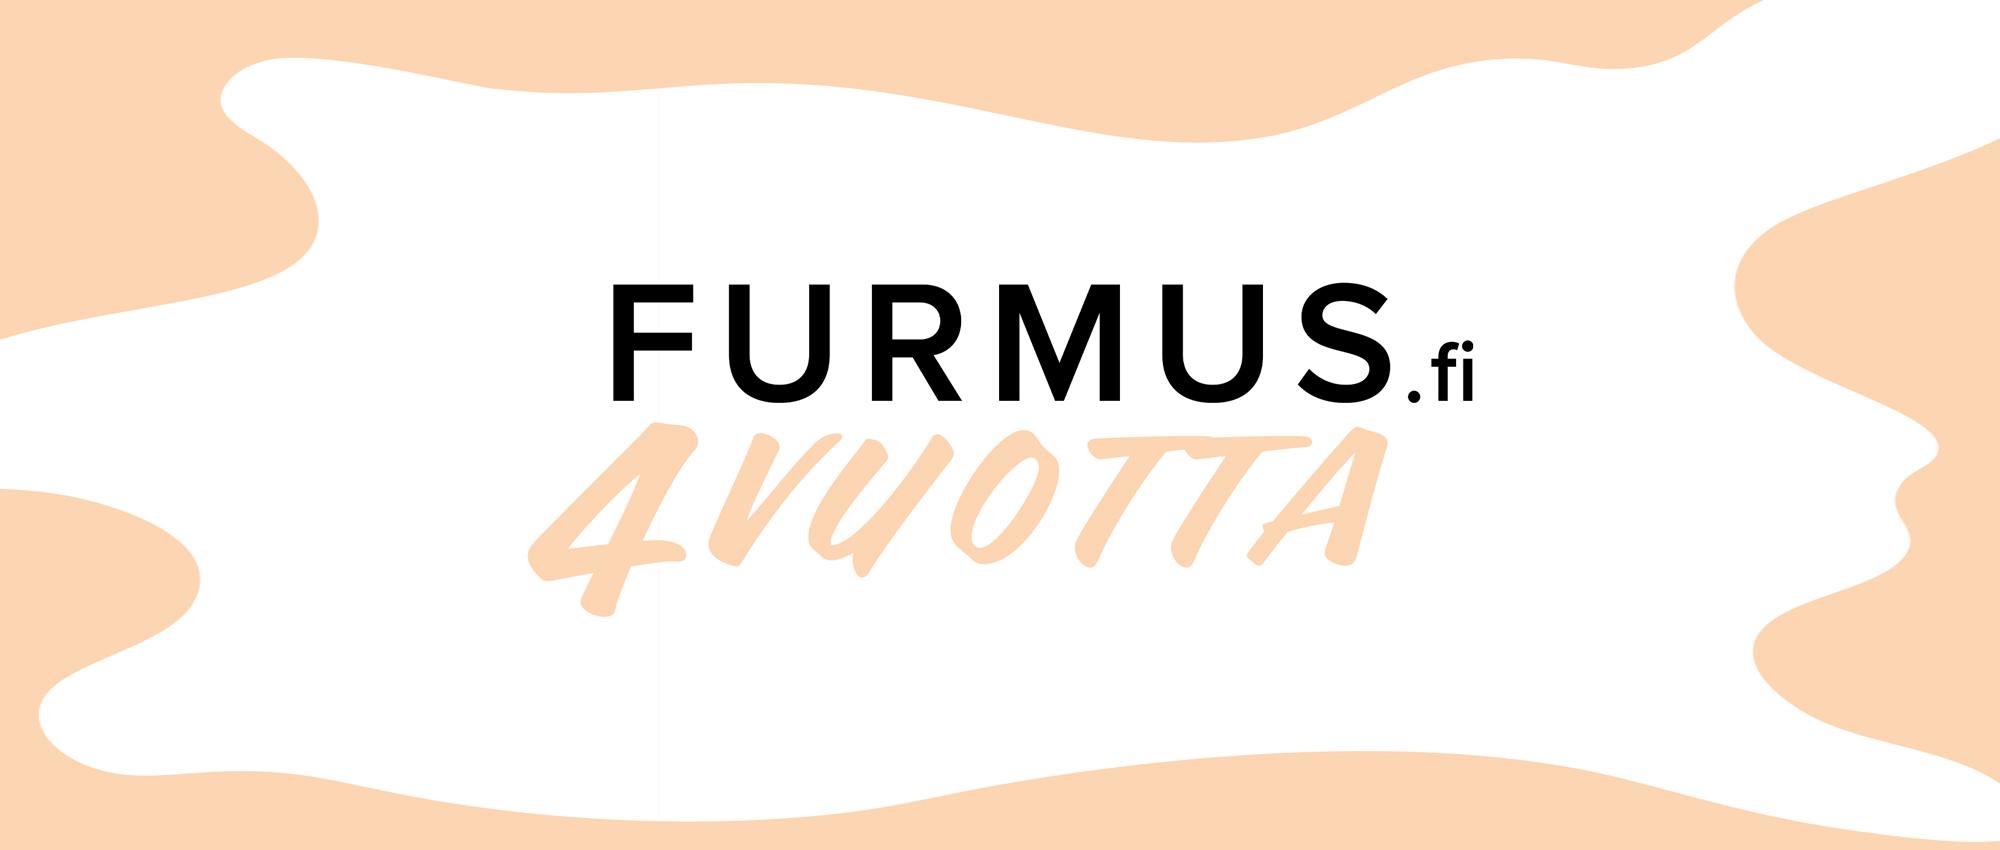 Furmus.fi 4 vuotta